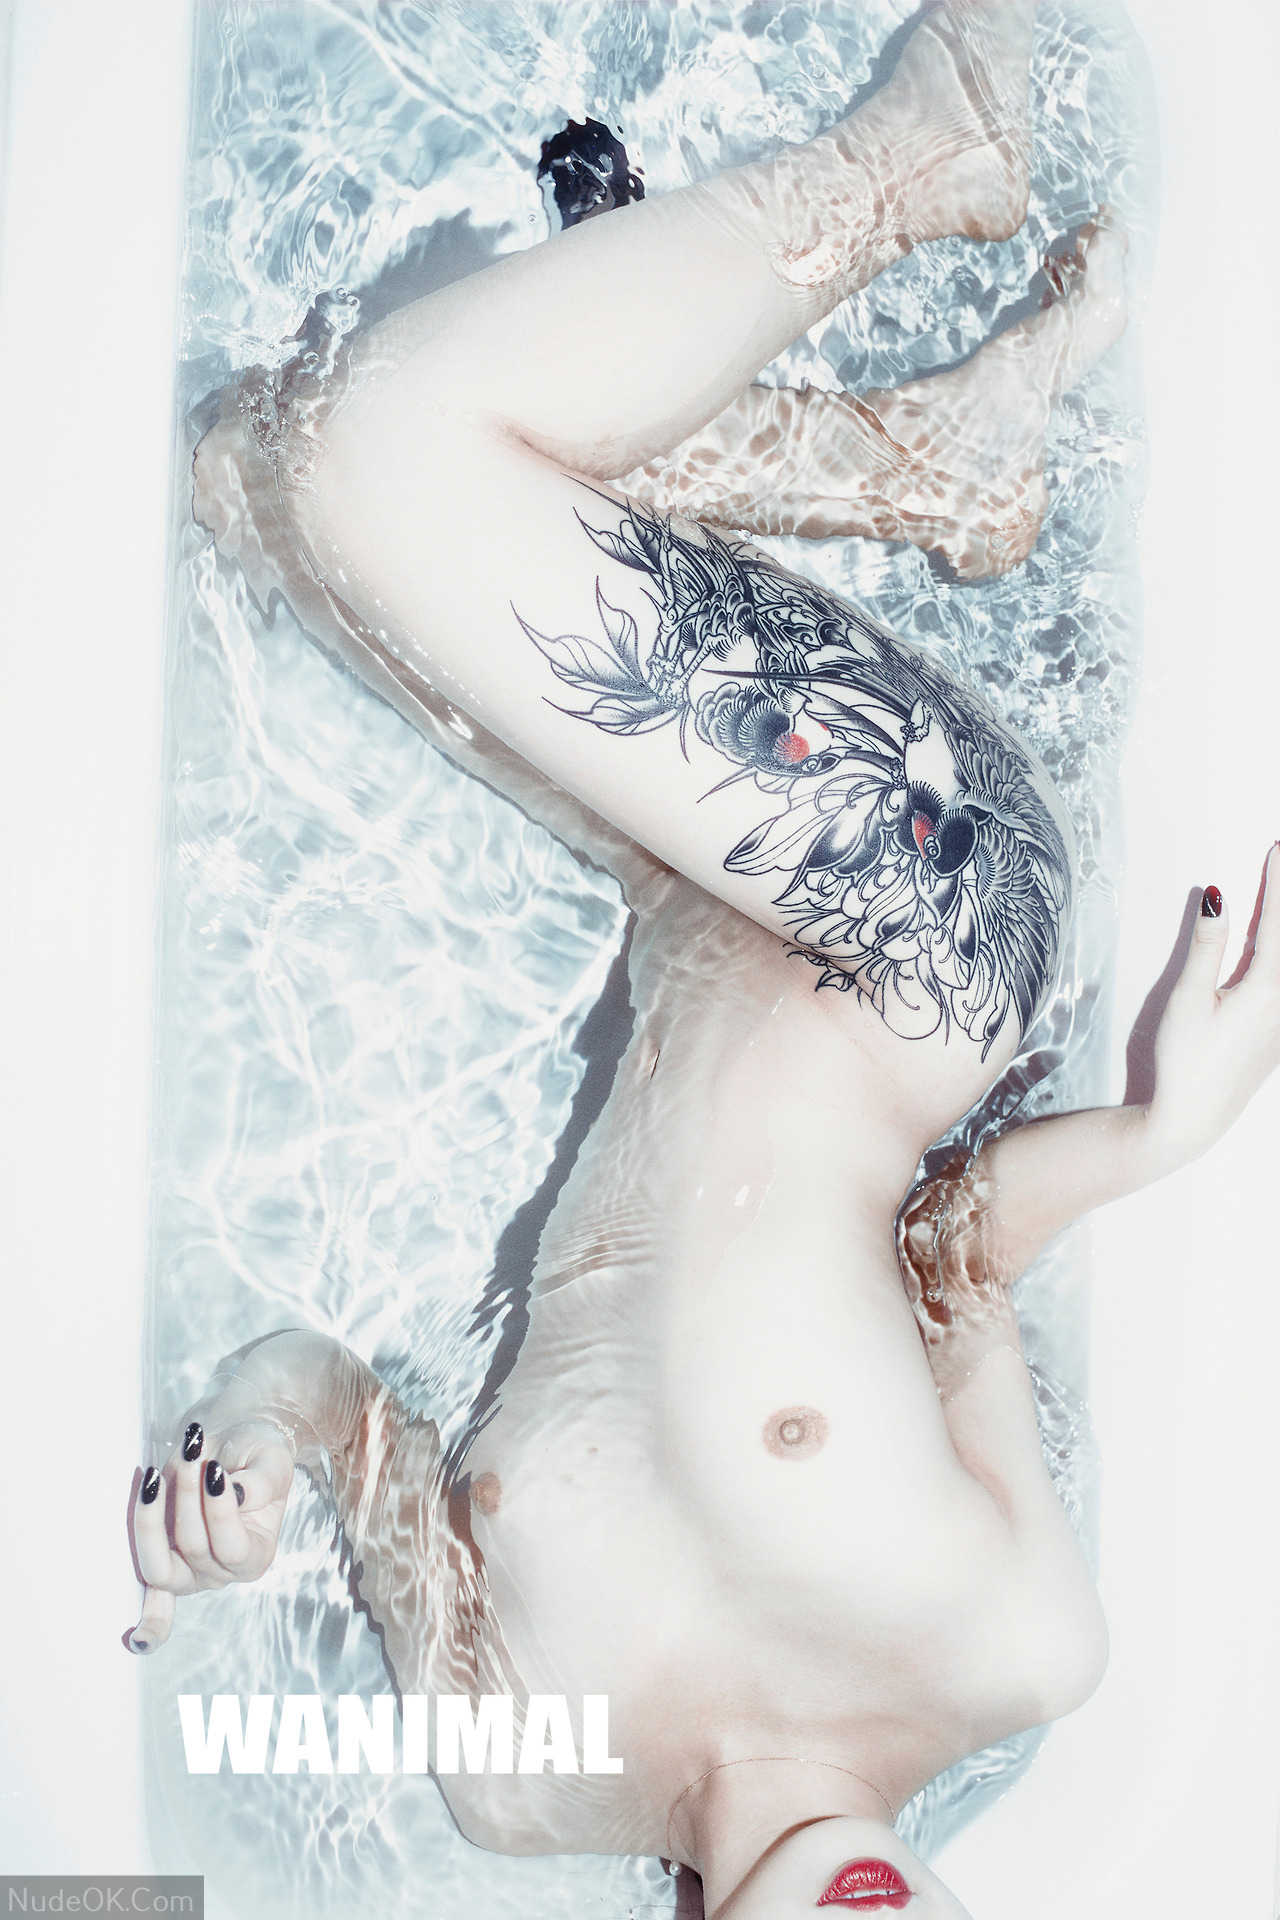 NudeOK.Com - Nude Art Set - WANIMAL นางแบบจีน - อีโรติก - นู้ด; - Porn art asian